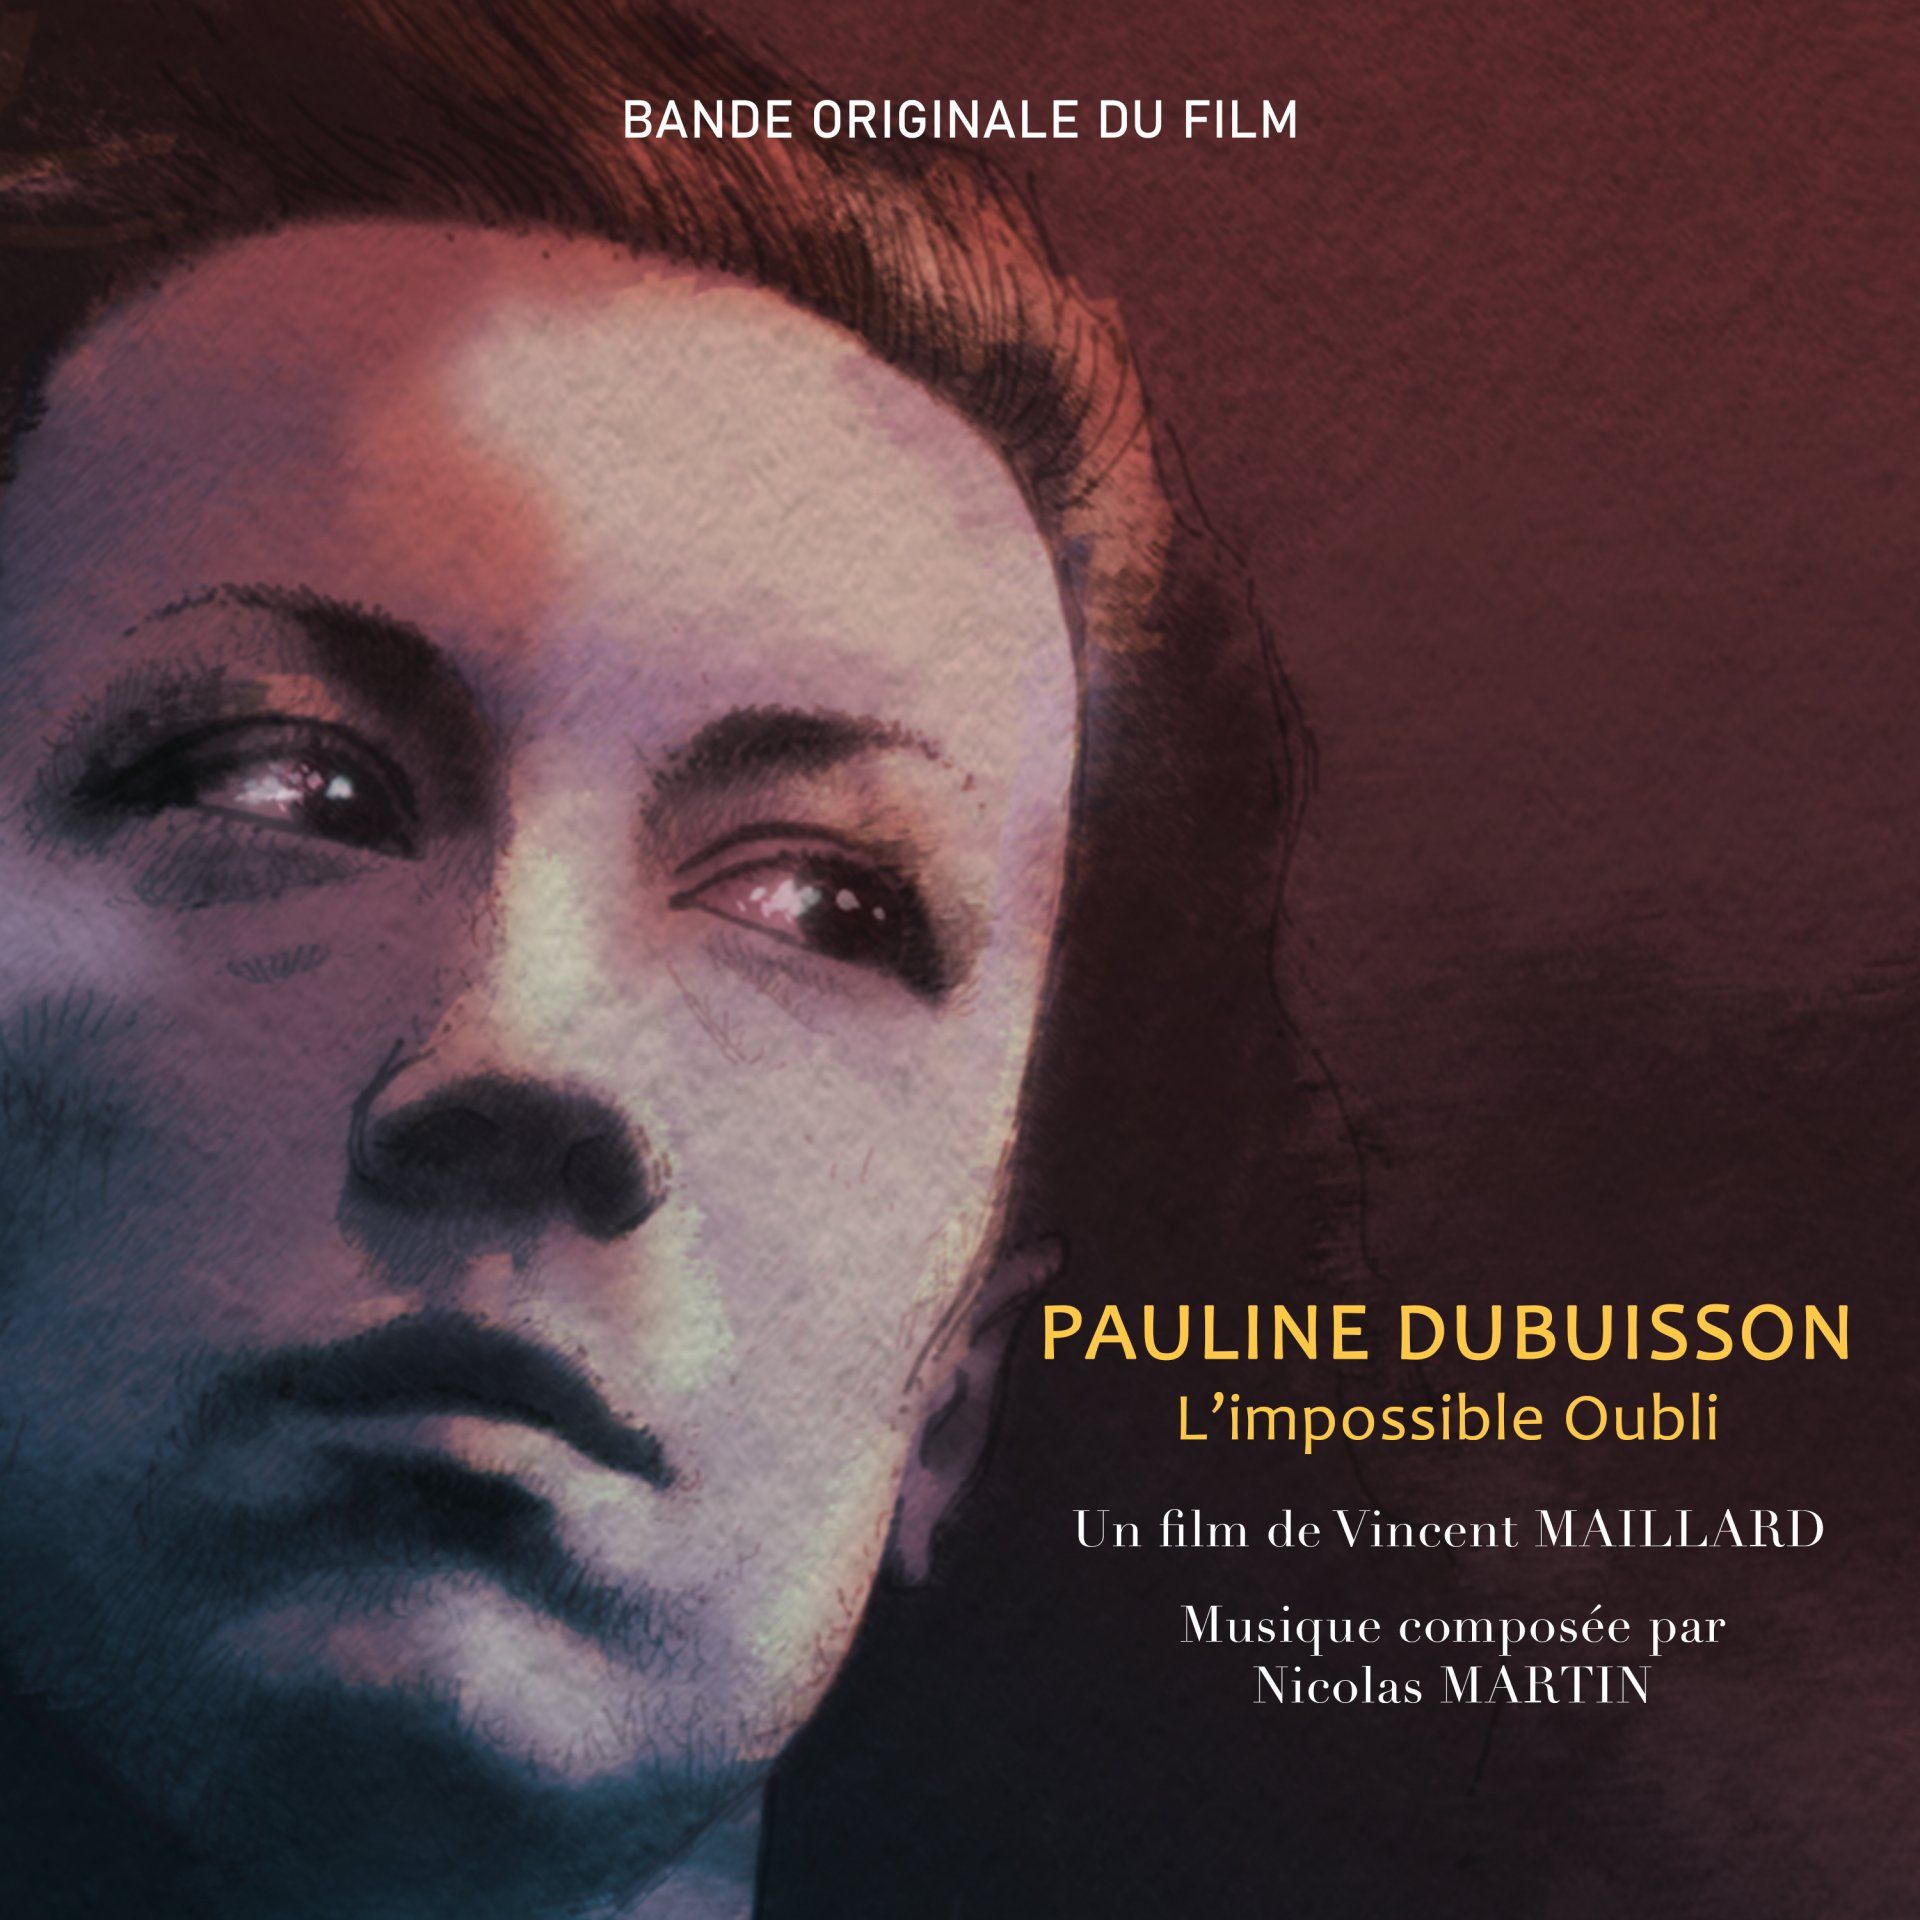 Pauline Dubuisson, l'impossible oubli